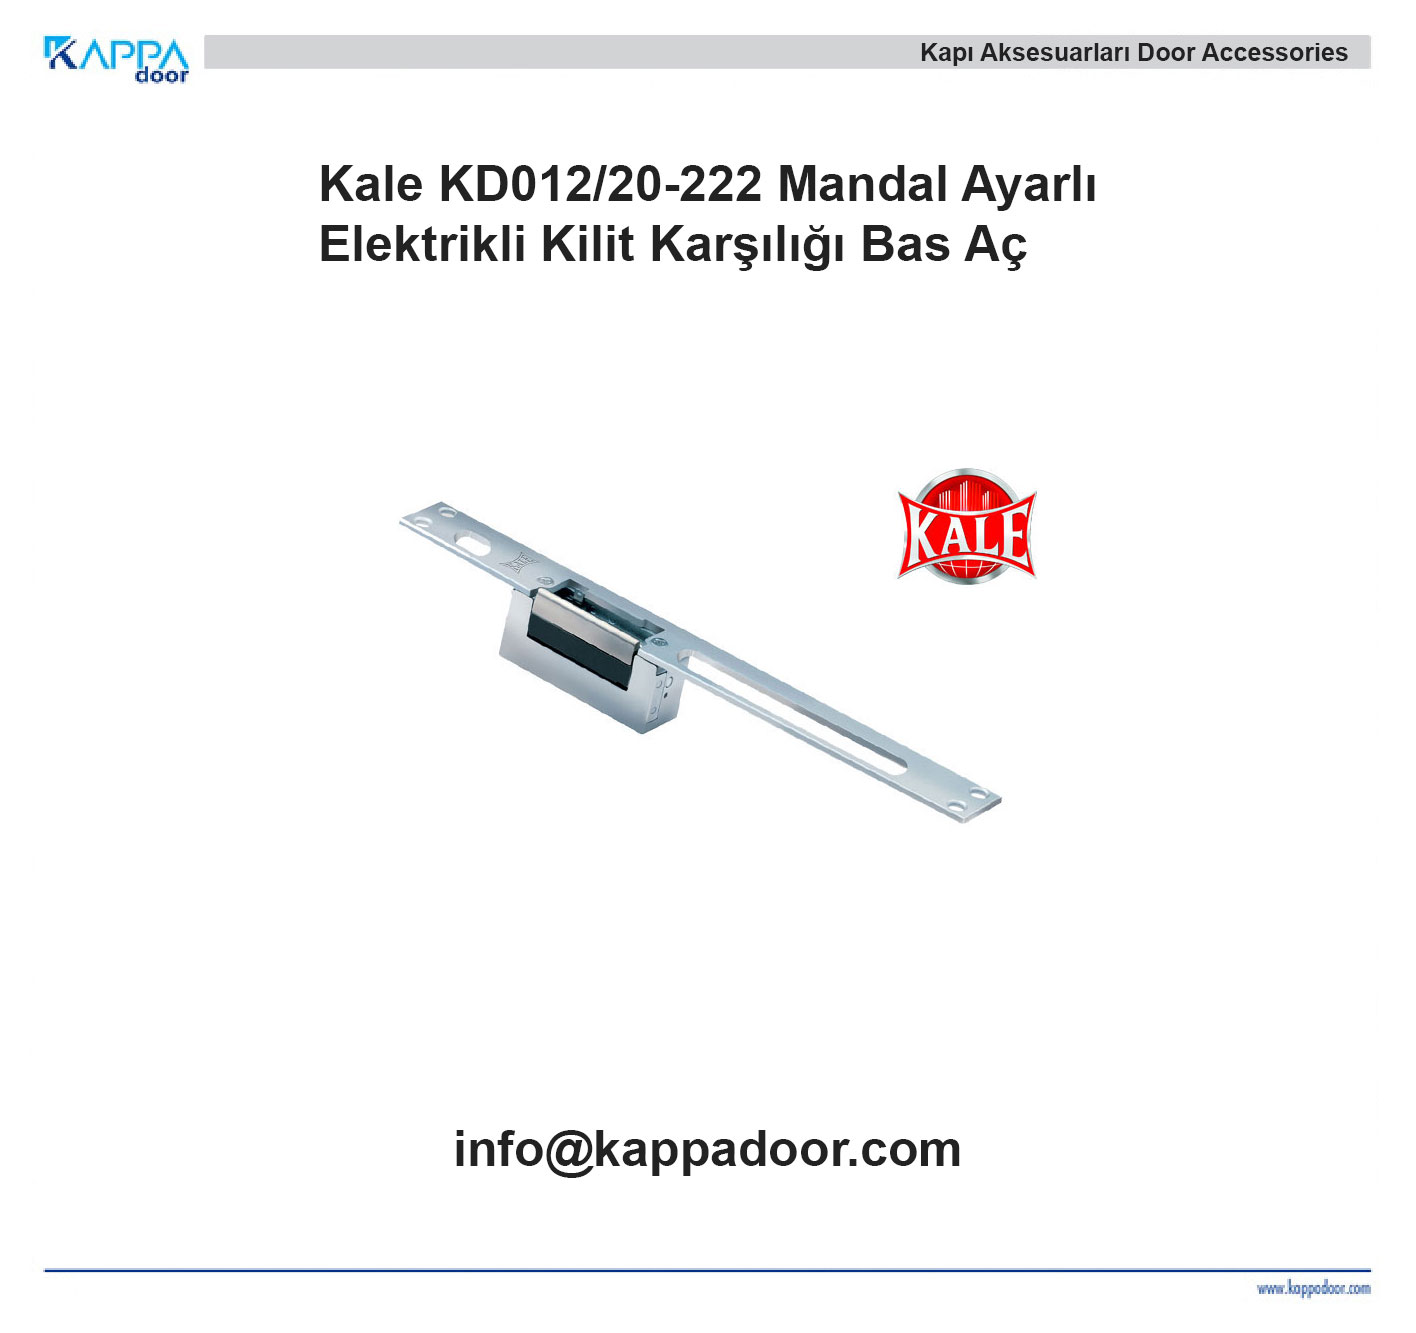 Kale KD012/20-222 Mandal Ayarlı Elektrikli Kilit Karşılığı Bas Aç